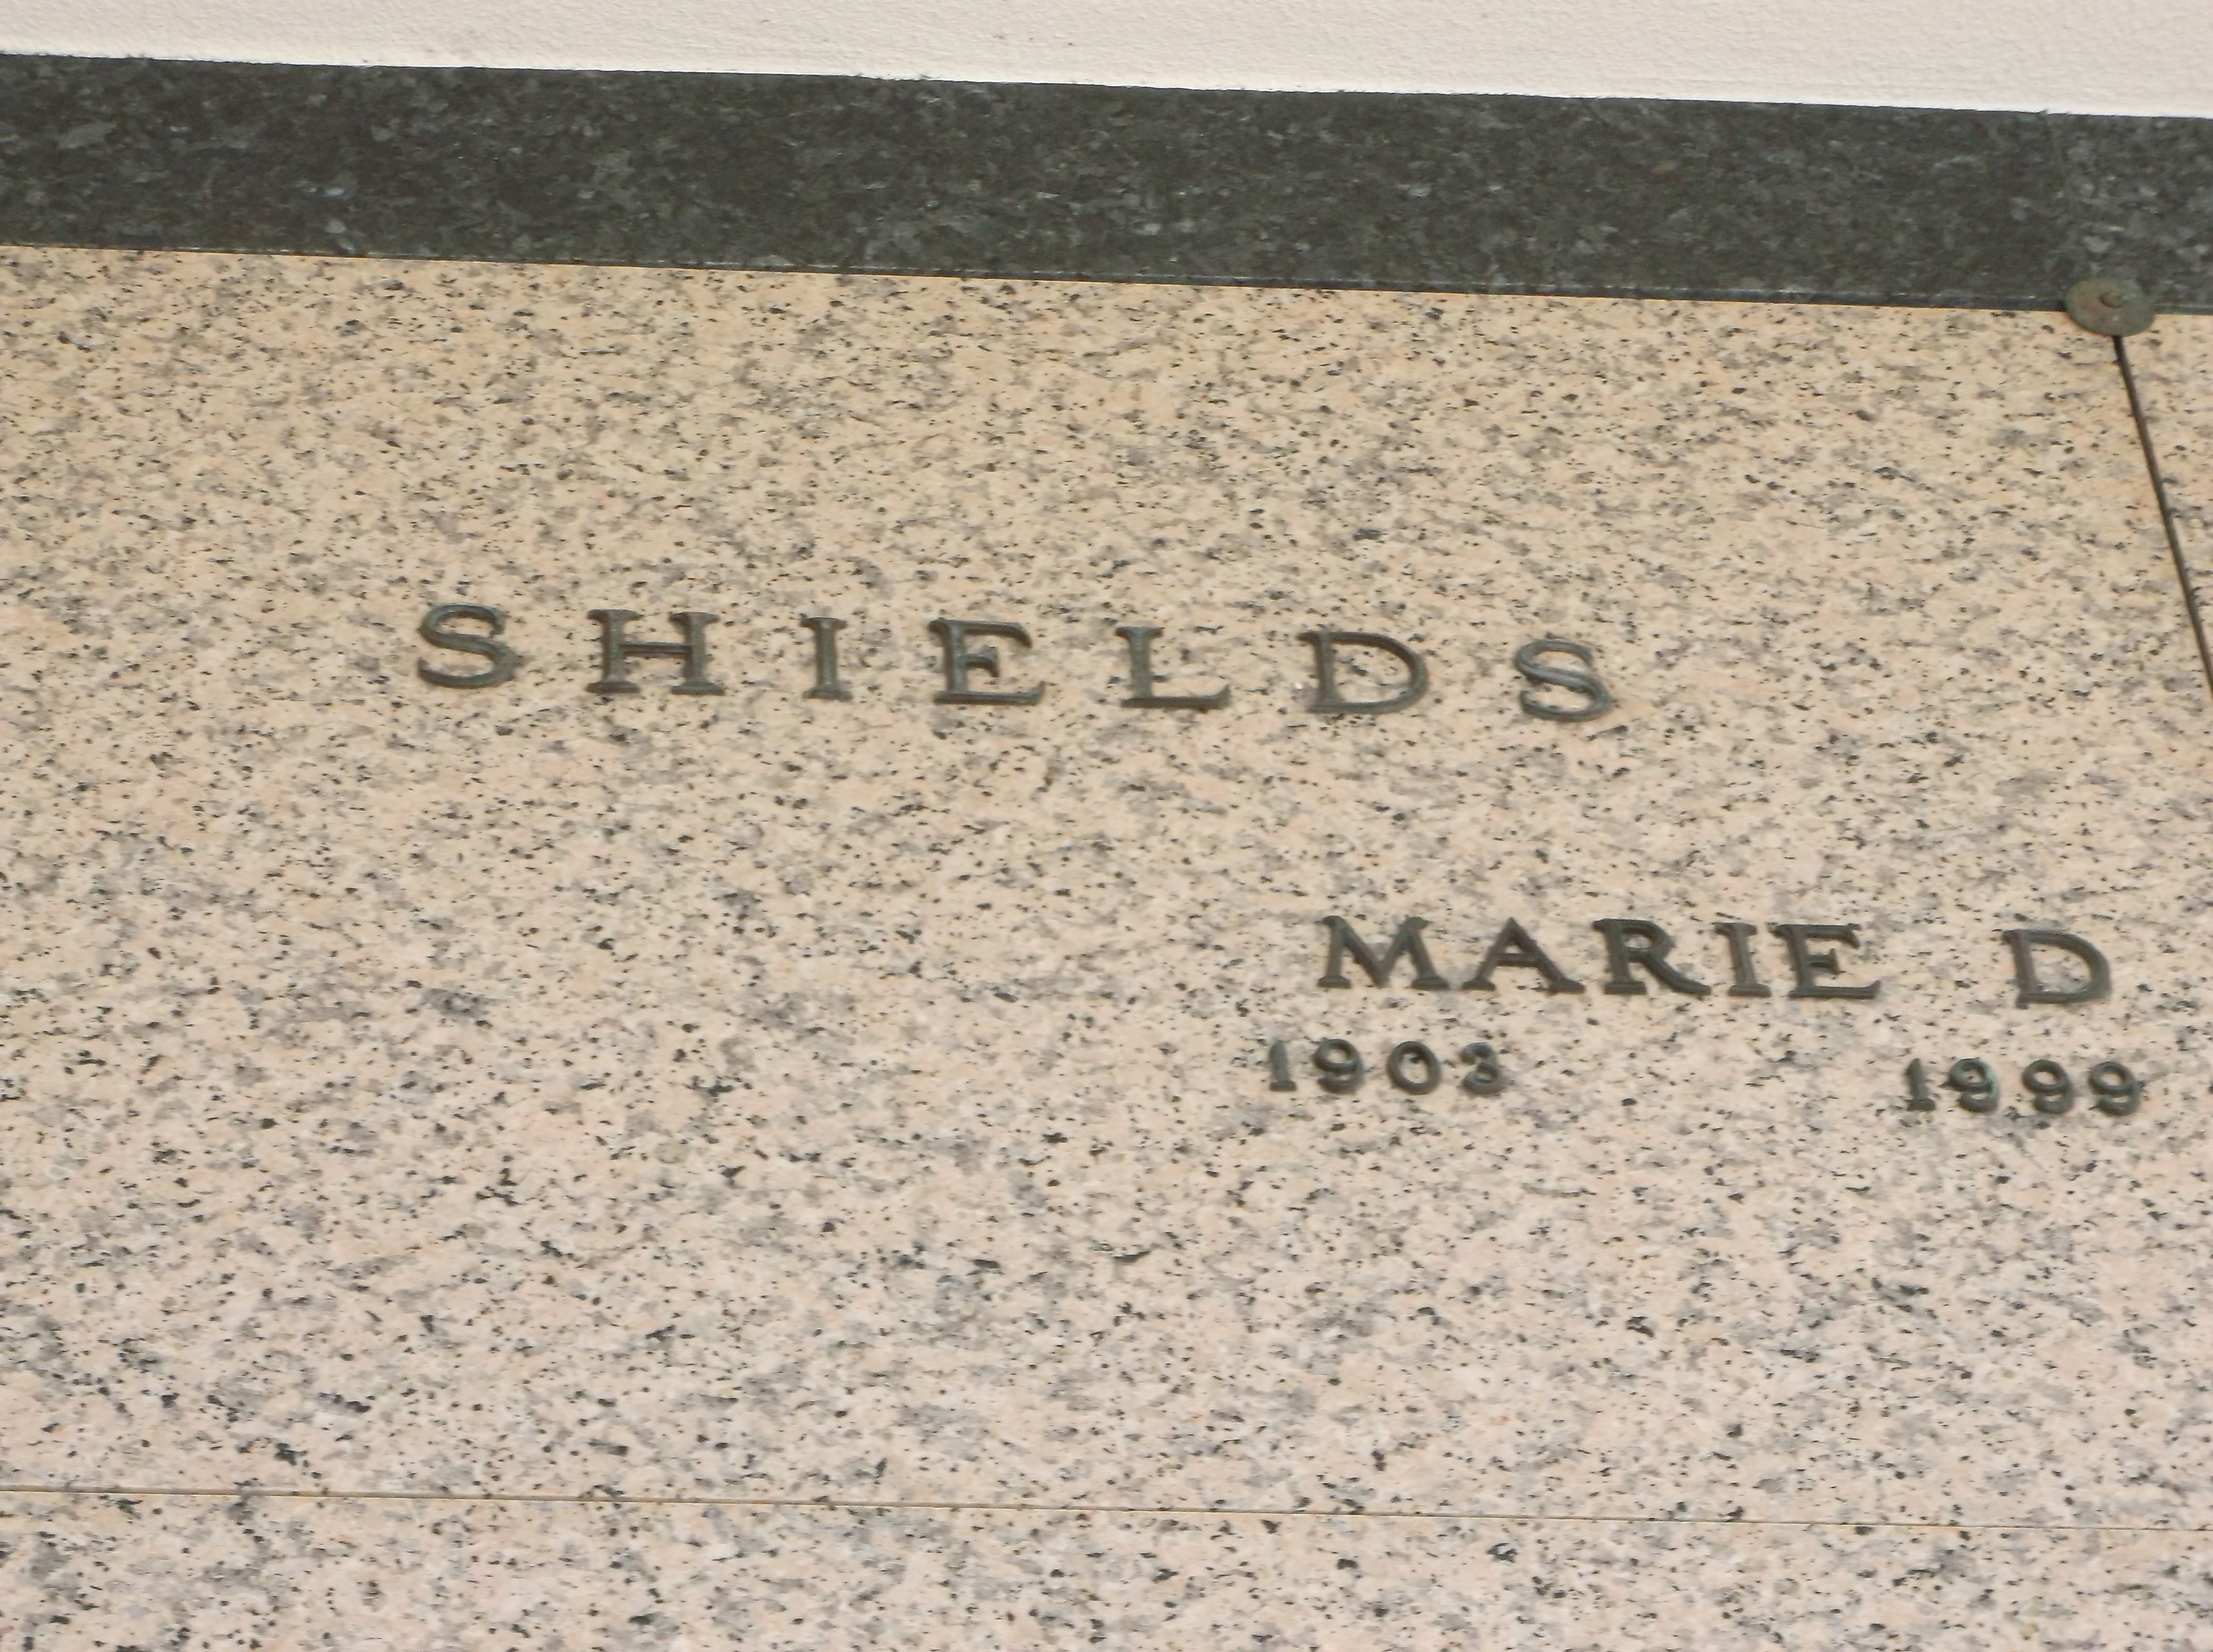 Marie D Shields